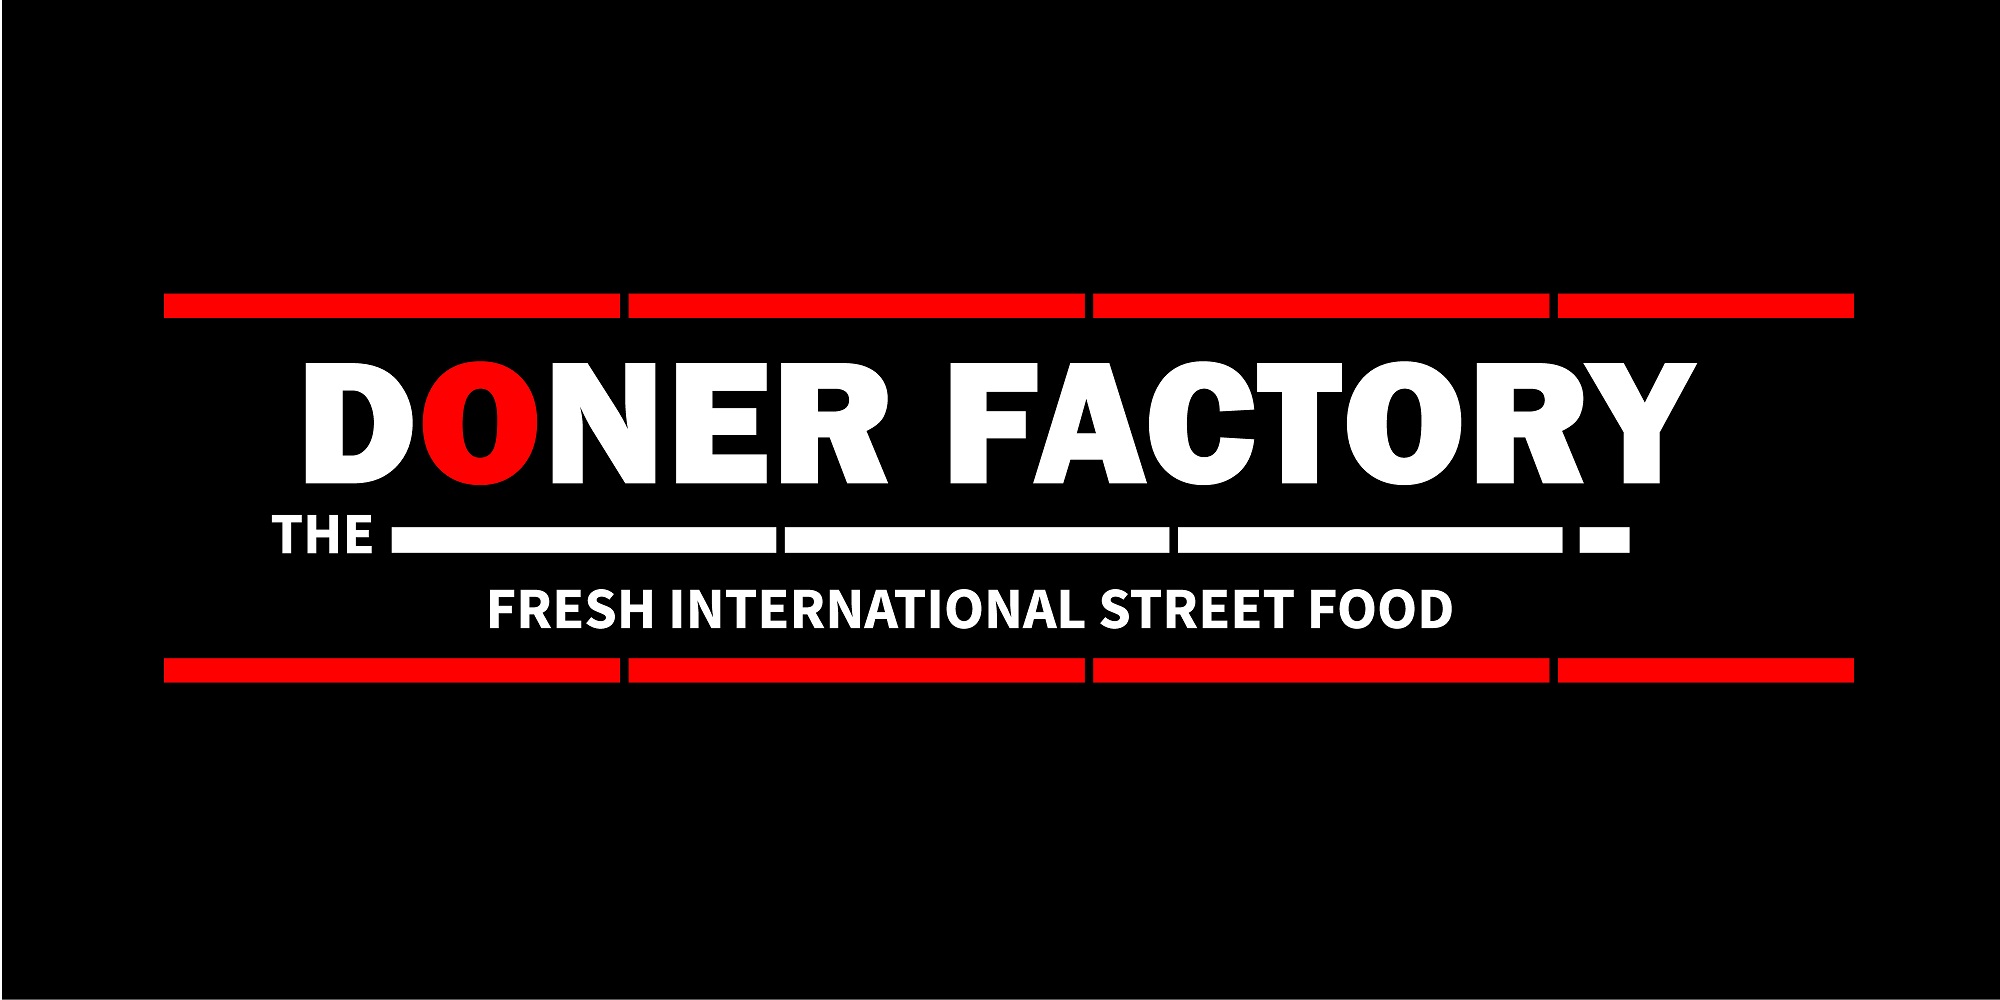 THE DONER FACTORY FRESH INTERNATIONAL STREET FOOD